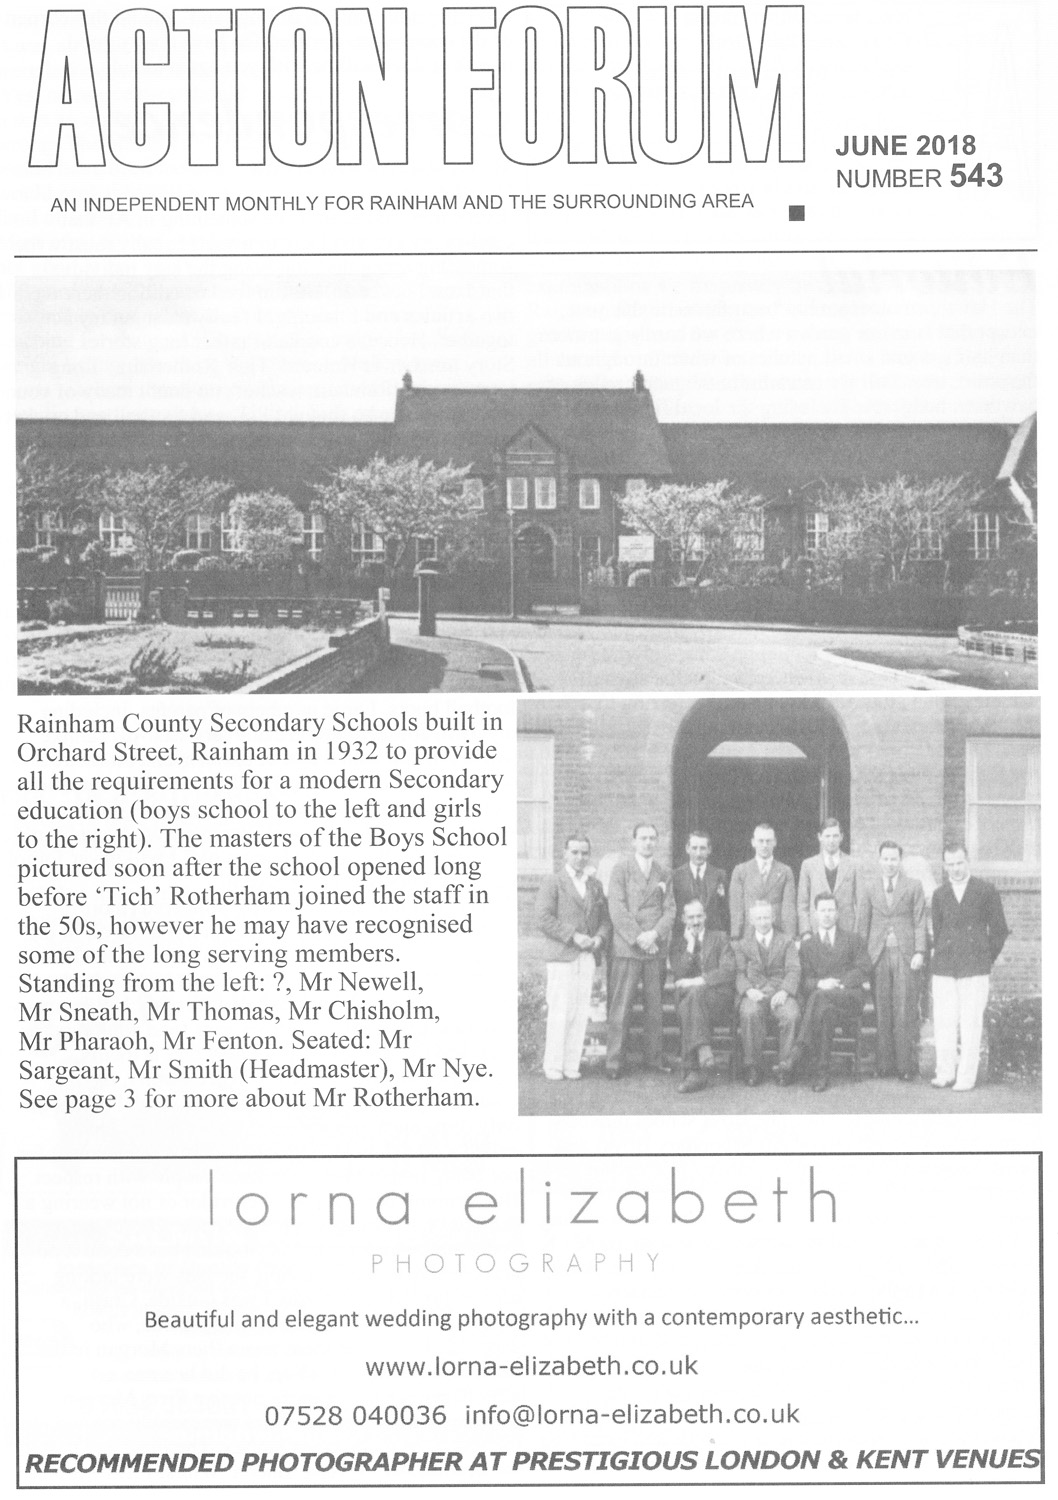 Cover photo of Rainham County Secondary Schools built in Orchard Street Rainham in 1932